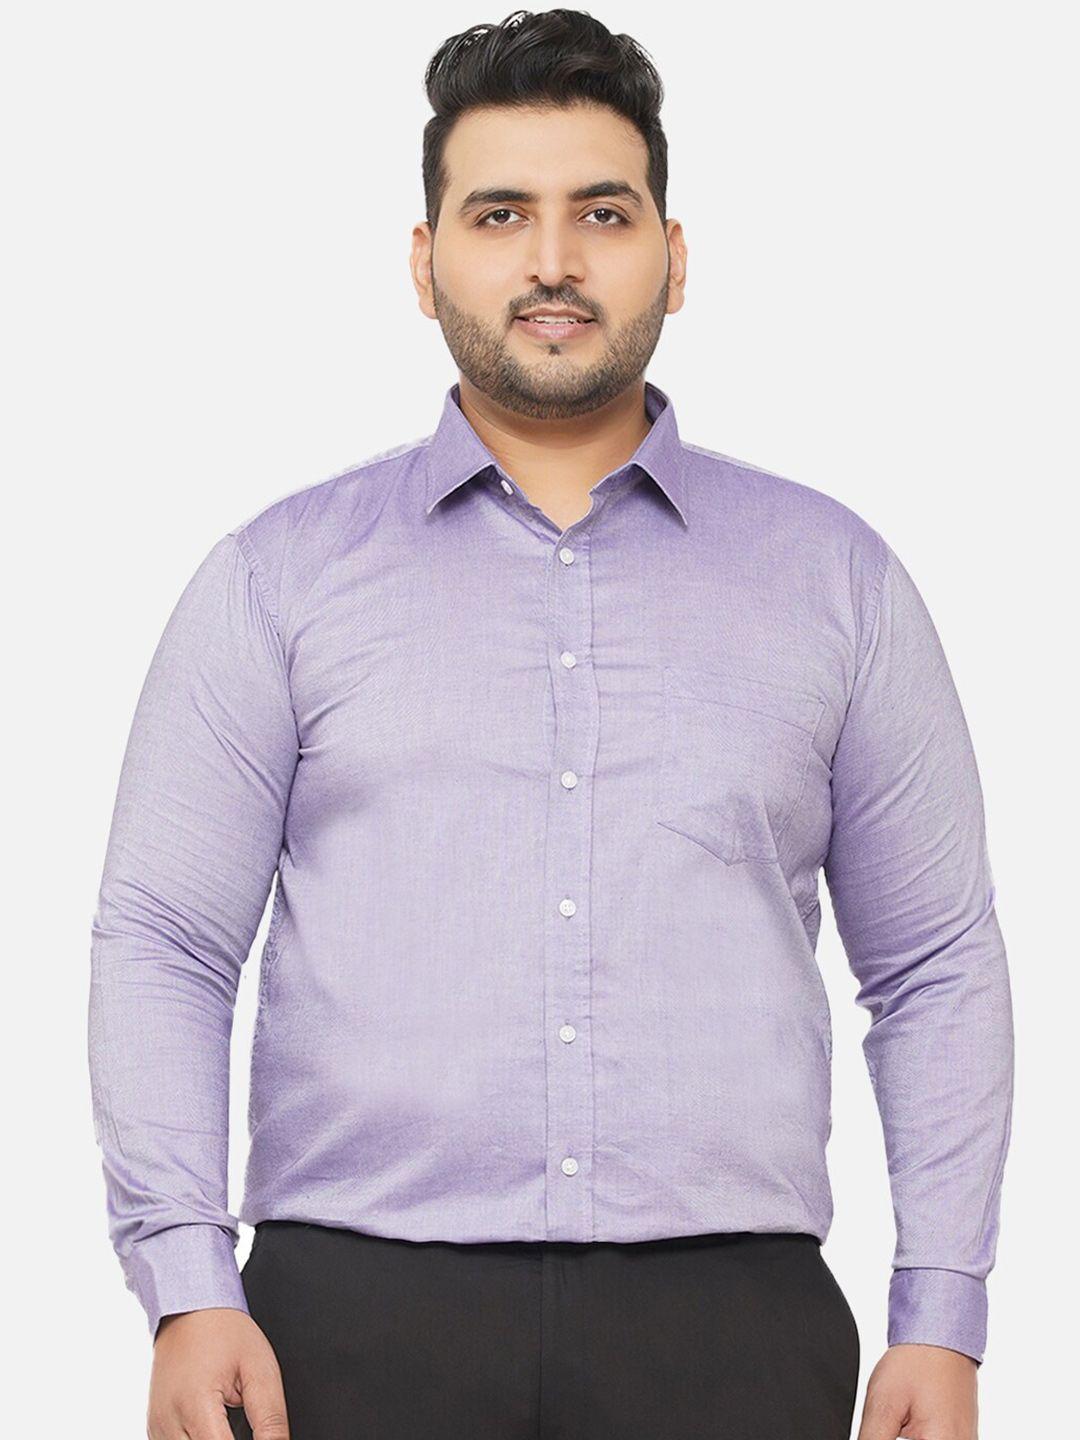 john pride men plus size purple comfort formal shirt